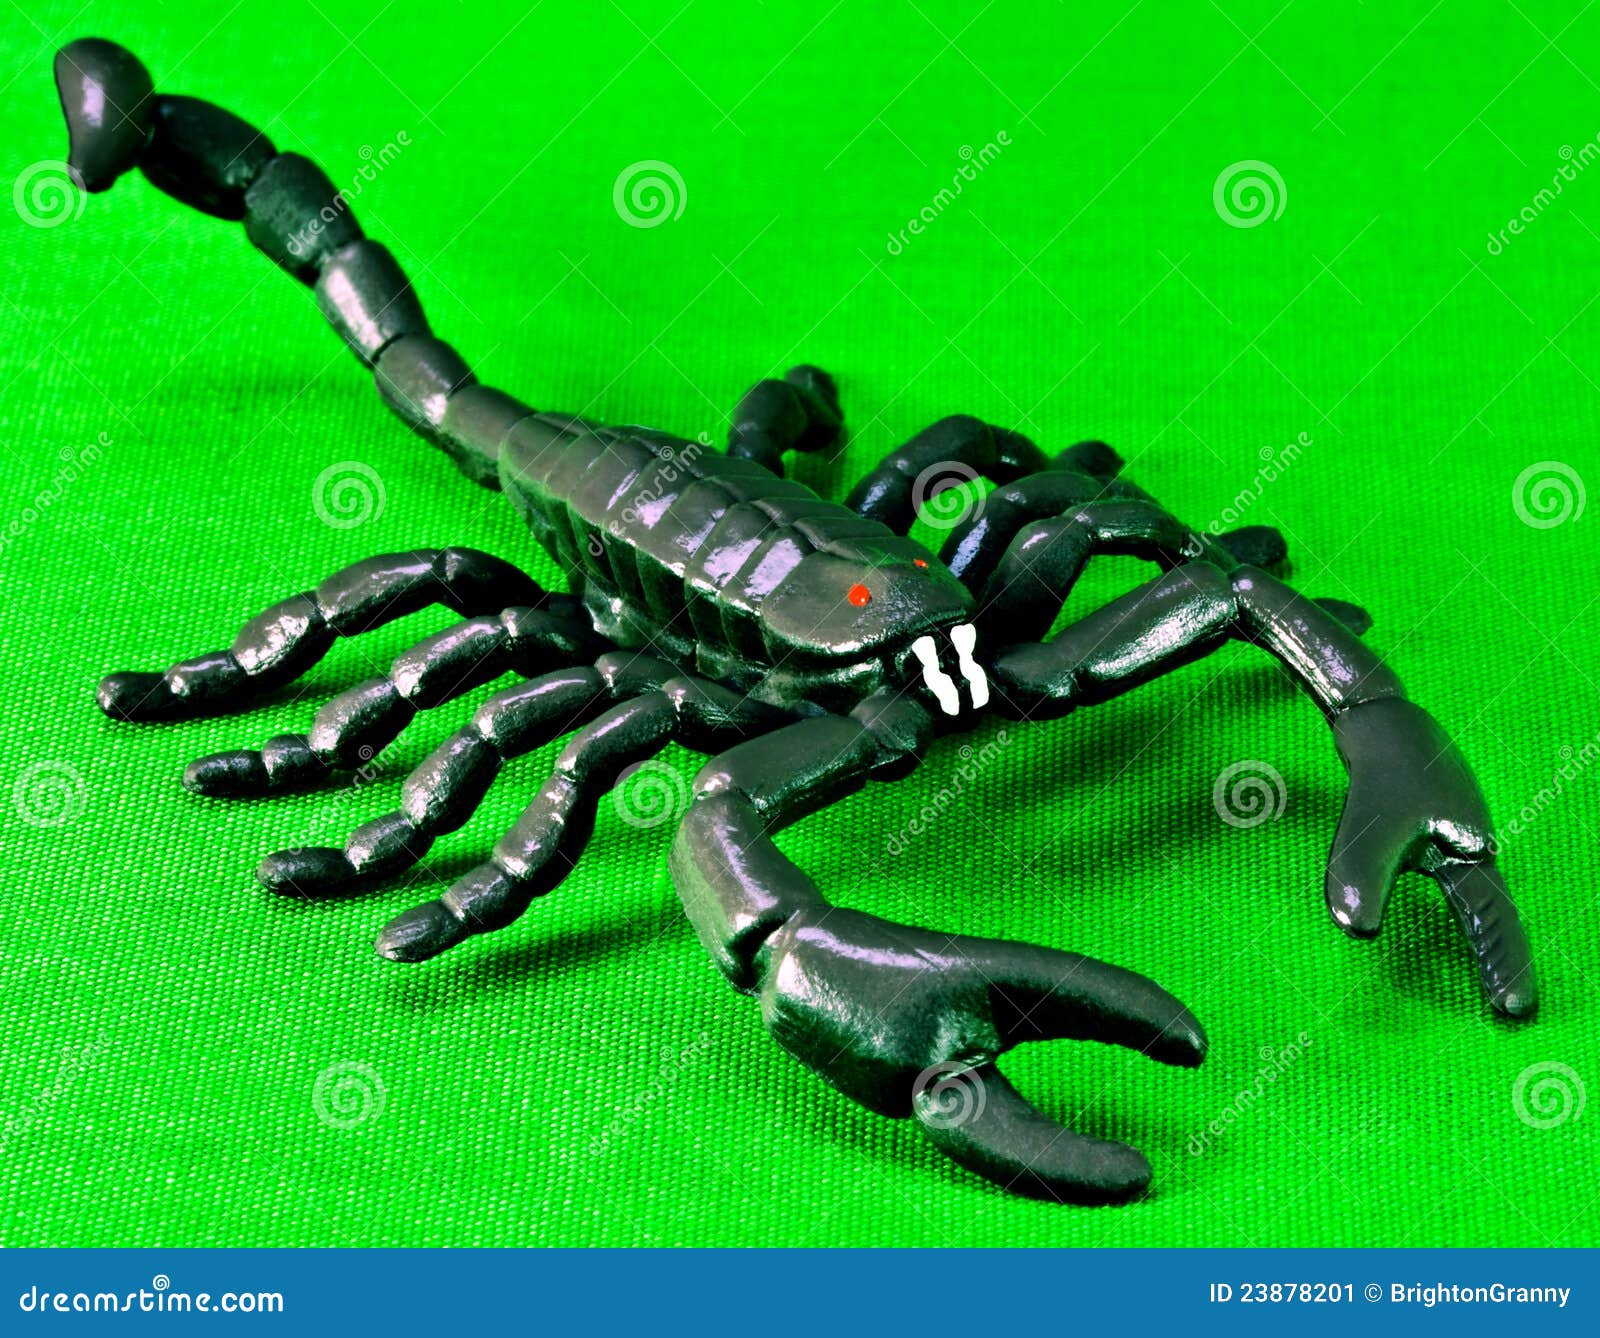 Plastic toy scorpion. stock image. Image of plastic, horoscope - 23878201